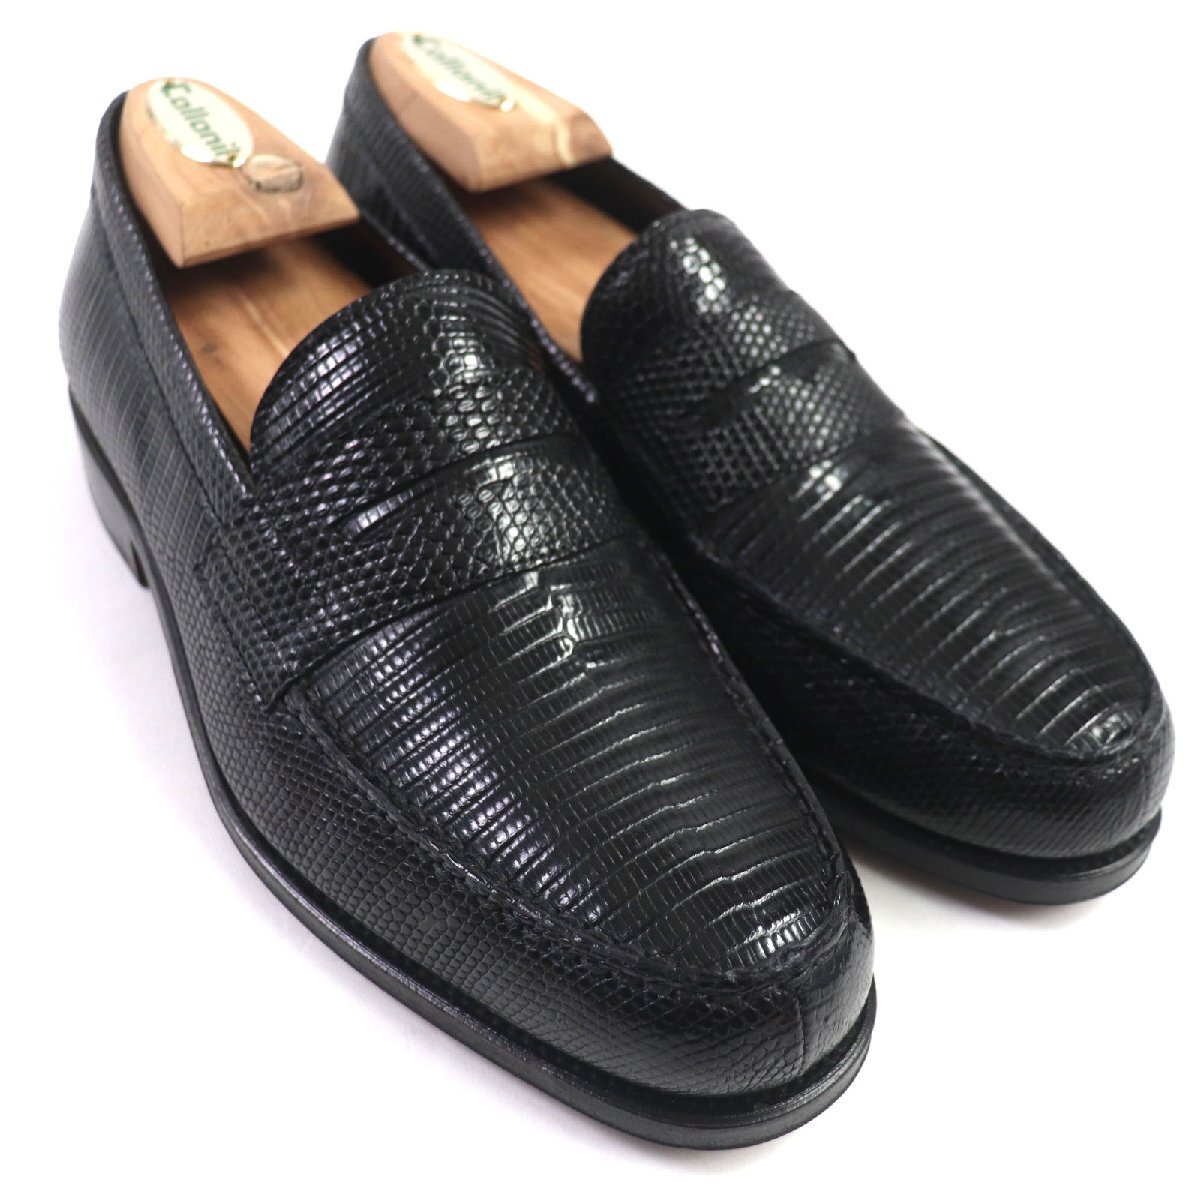  unused goods VCARMINAkarumina Lizard U chip leather shoes Loafer black 5.5 storage bag attaching Spain made men's 